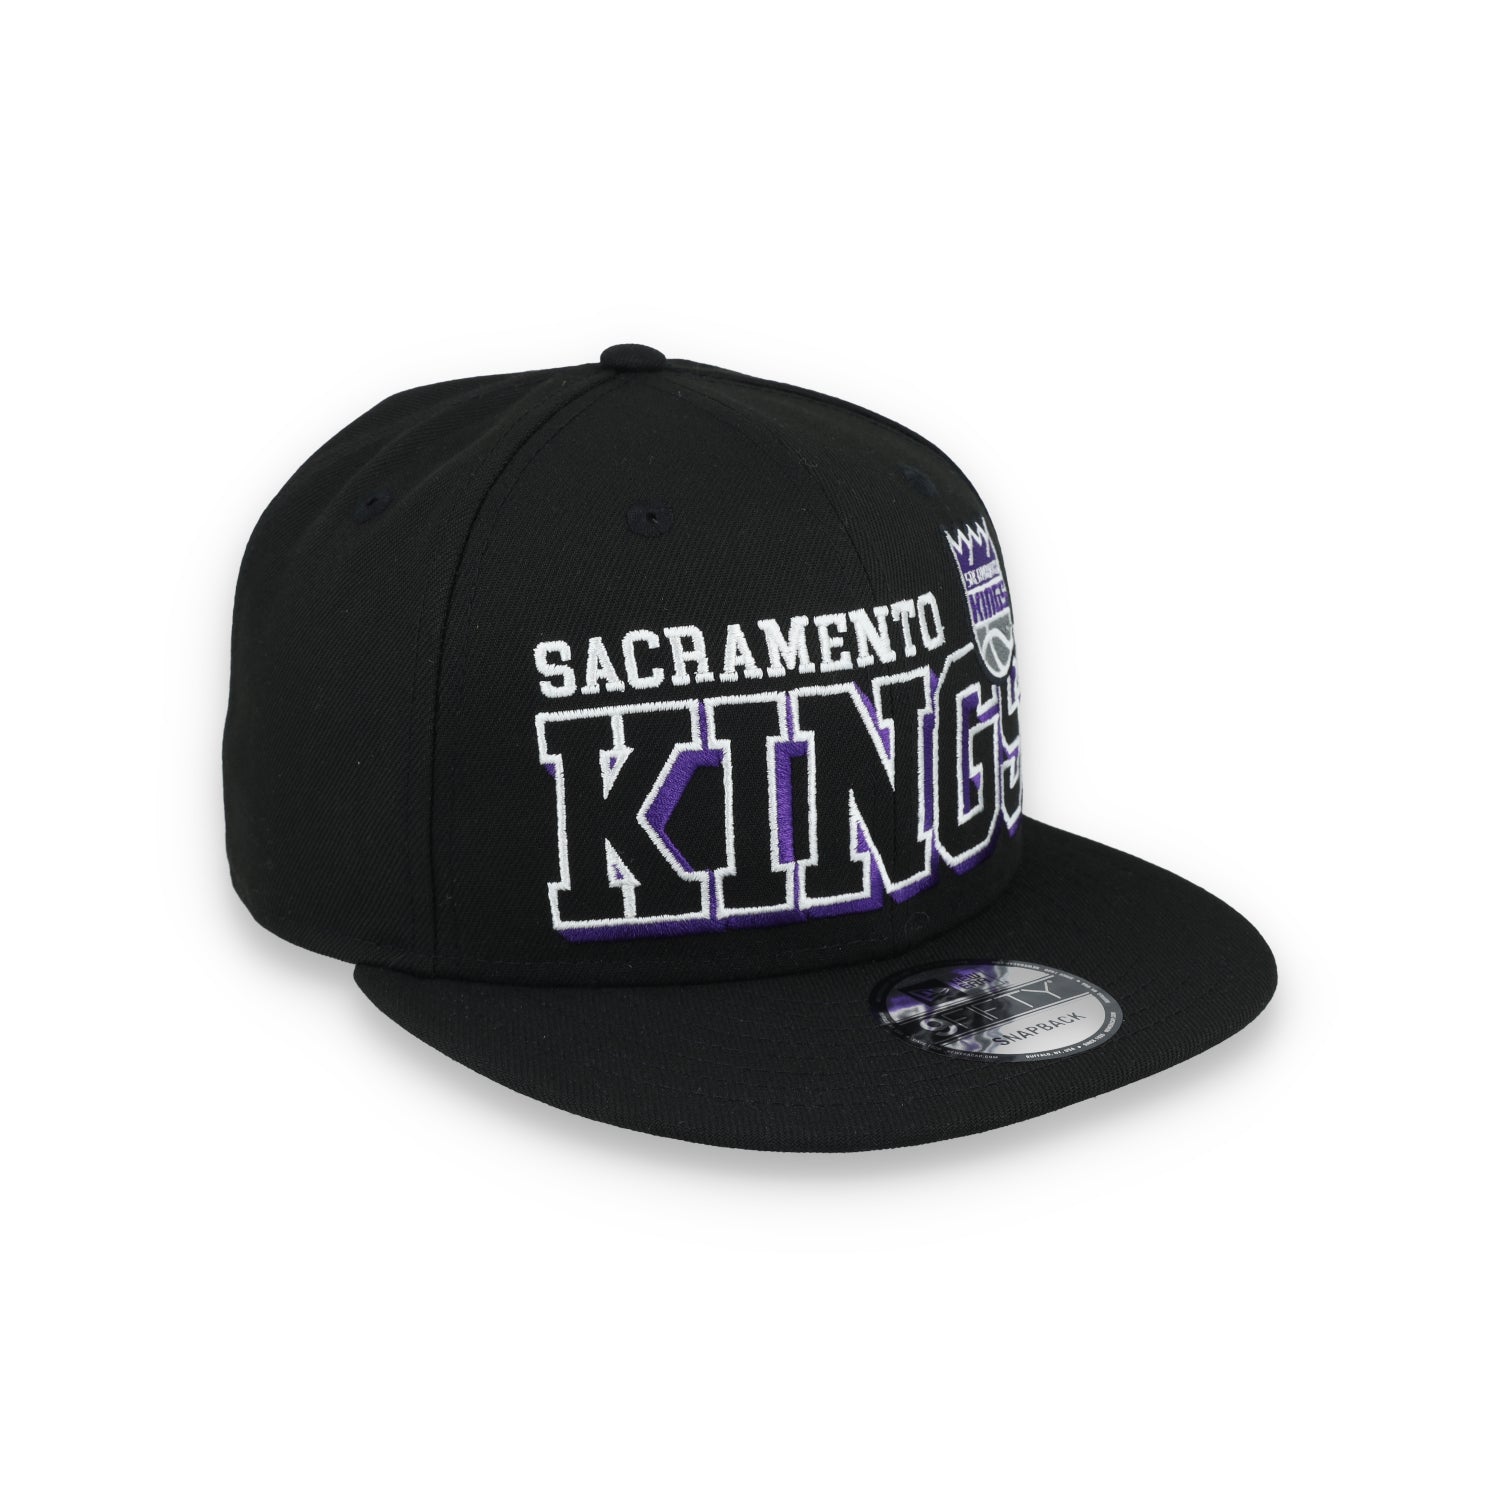 New Era Sacramento Kings Game Day 9FIFTY Snapback Hat